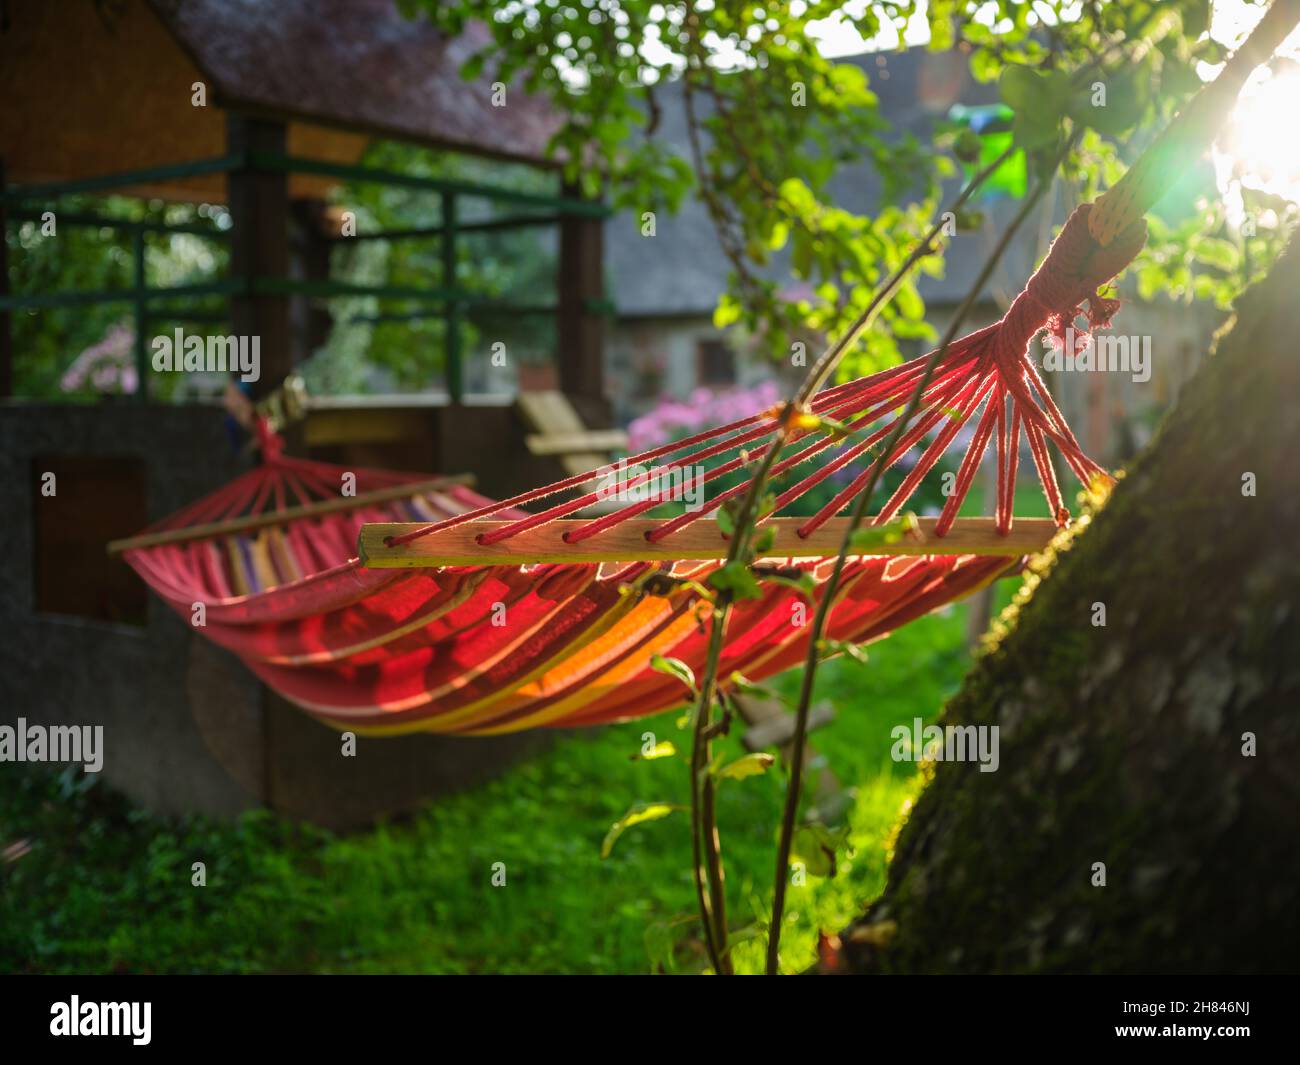 https://c8.alamy.com/comp/2H846NJ/hammock-sleeping-net-in-country-house-garden-in-summer-relaxing-under-apple-trees-2H846NJ.jpg